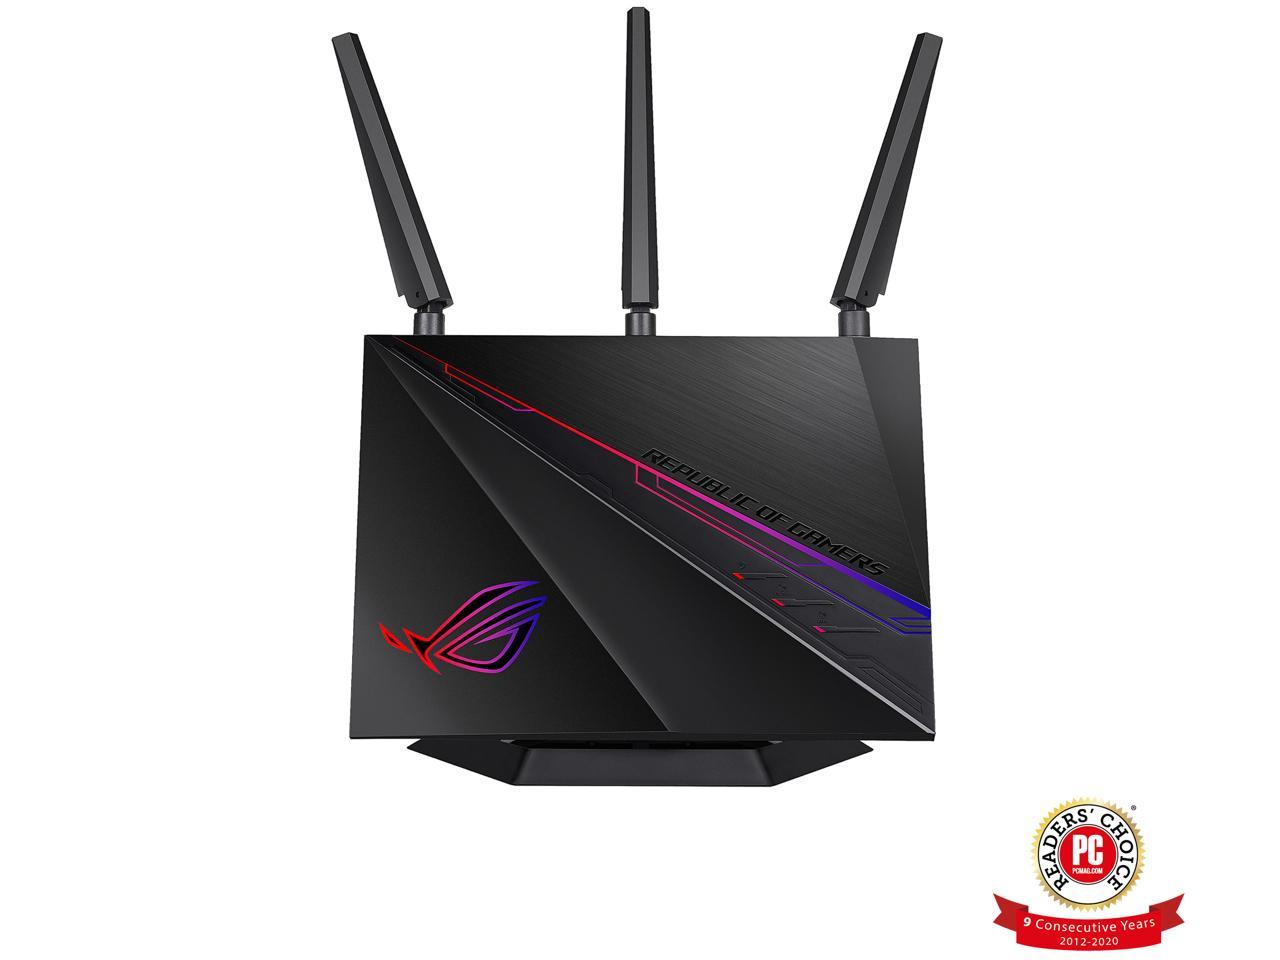 ASUS ROG Dual-Band Wireless Gigabit Wi-Fi Gaming Router (GT-AC2900) $112 + Free Shipping